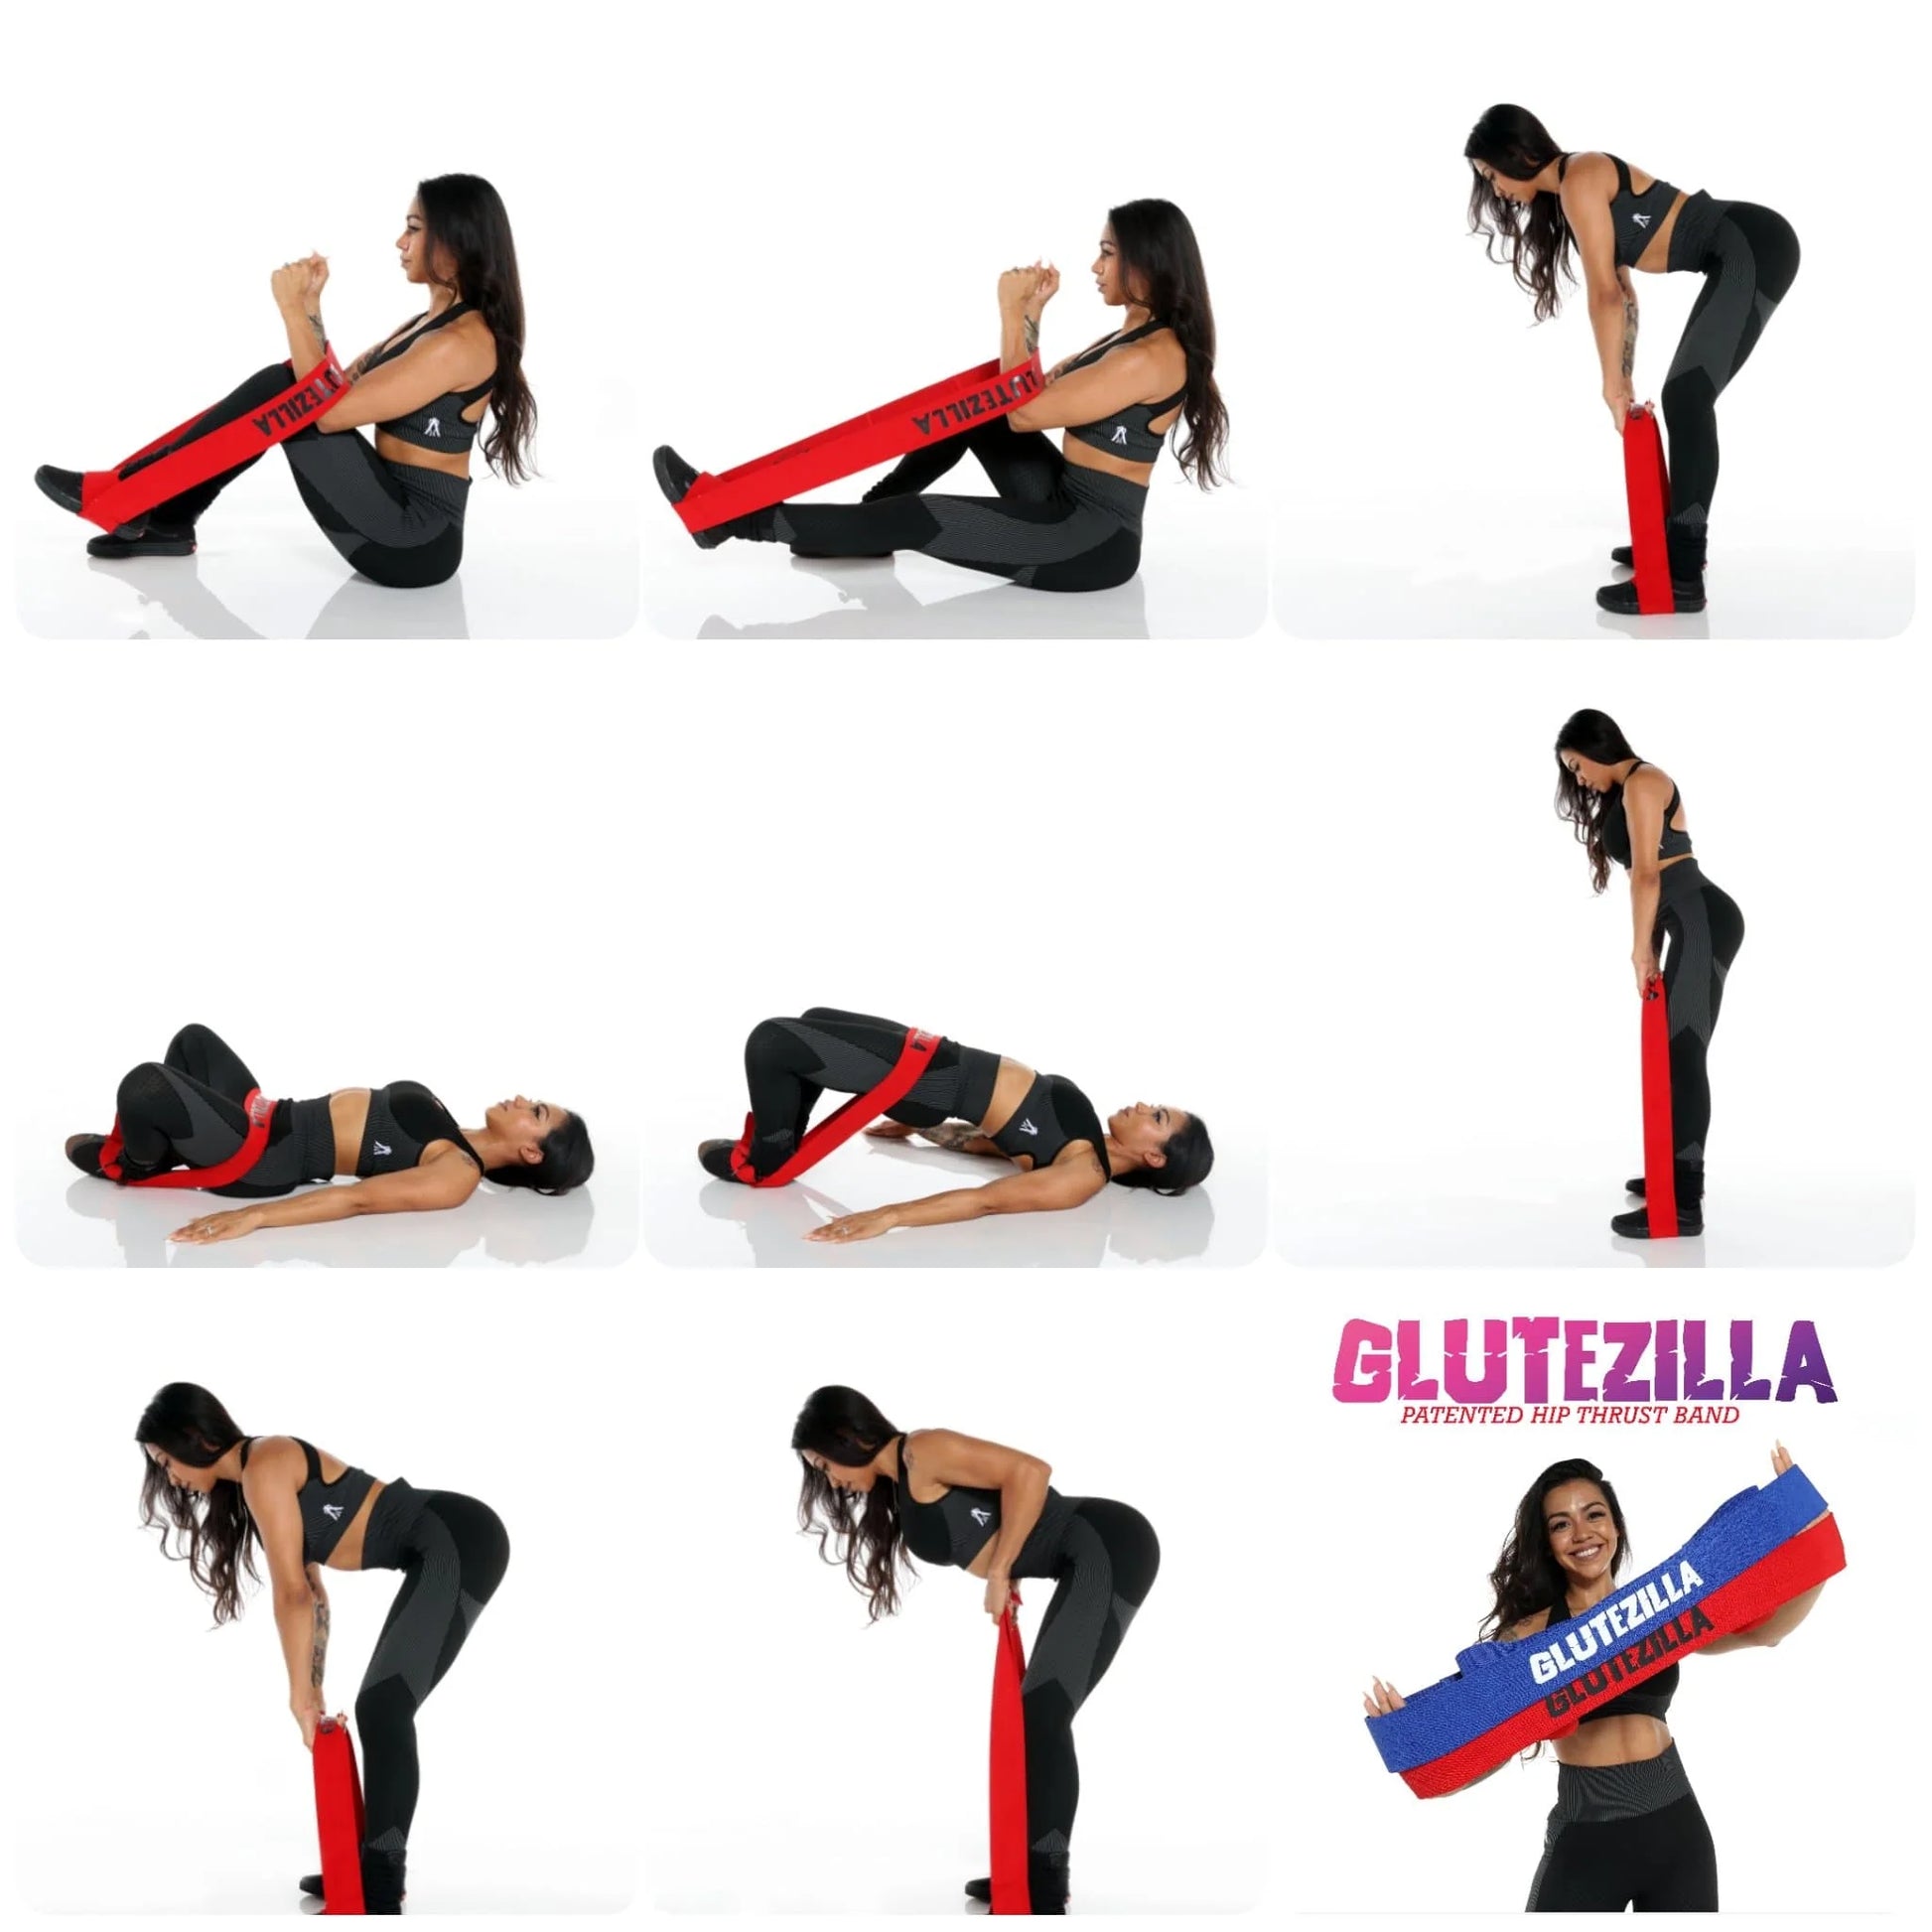 GLUTEZILLA Patented Hip Thrust Workout Exercise Band